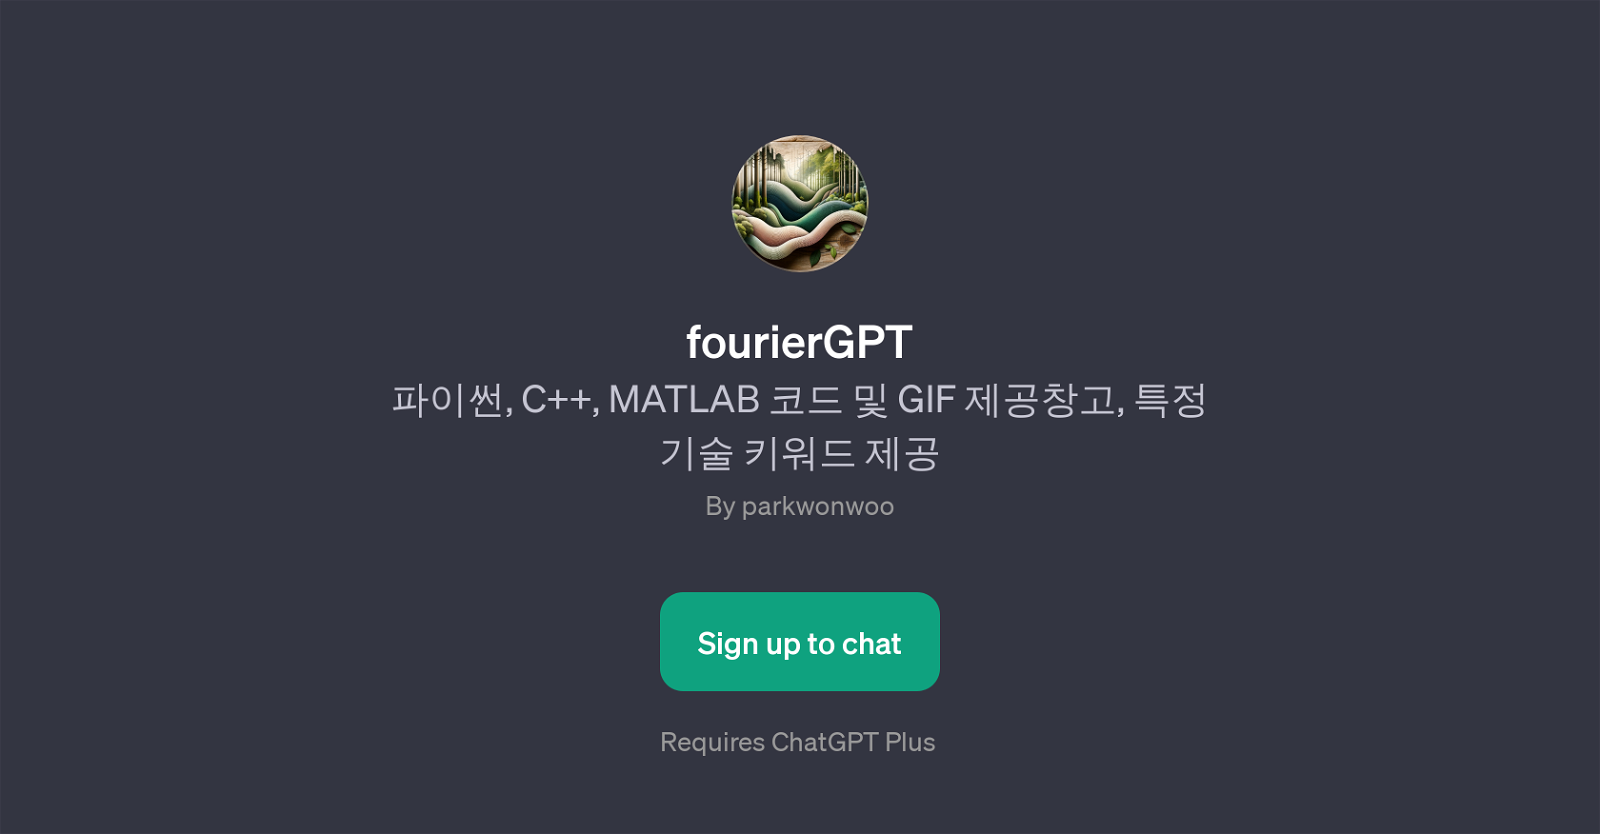 fourierGPT website